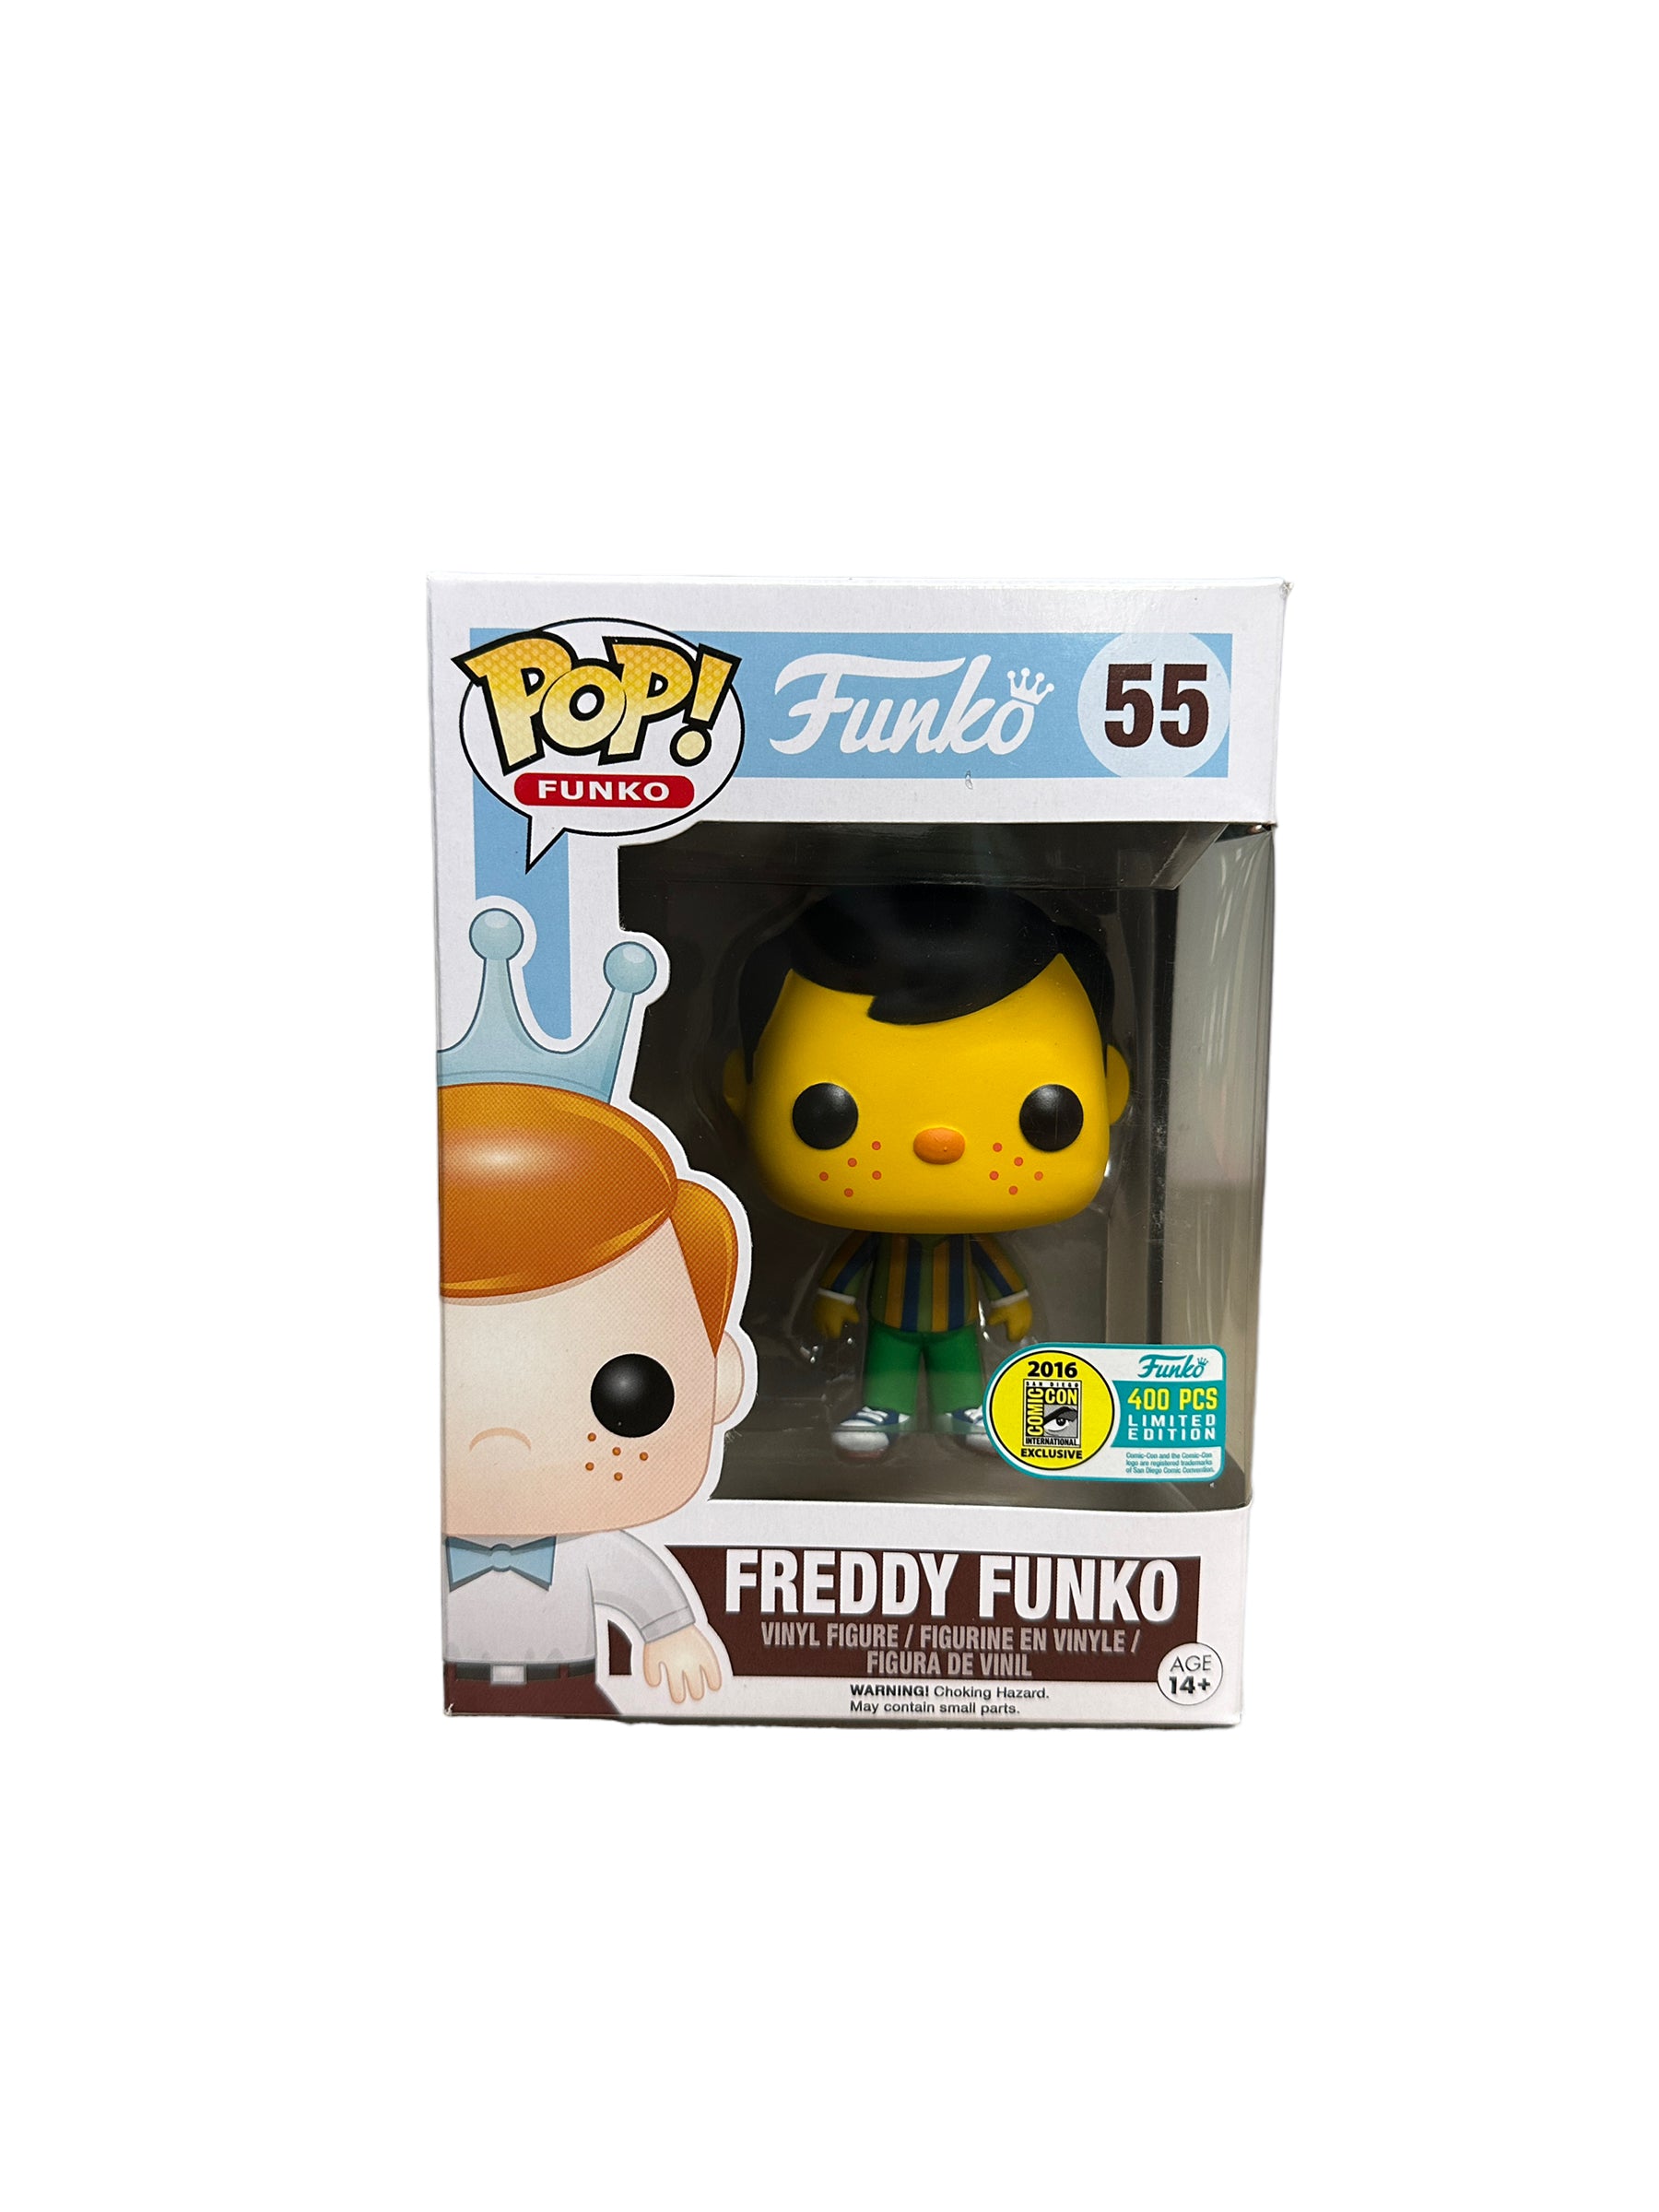 Freddy Funko as Bert #55 Funko Pop! - SDCC 2016 Exclusive LE400 Pcs - Condition 8.5/10